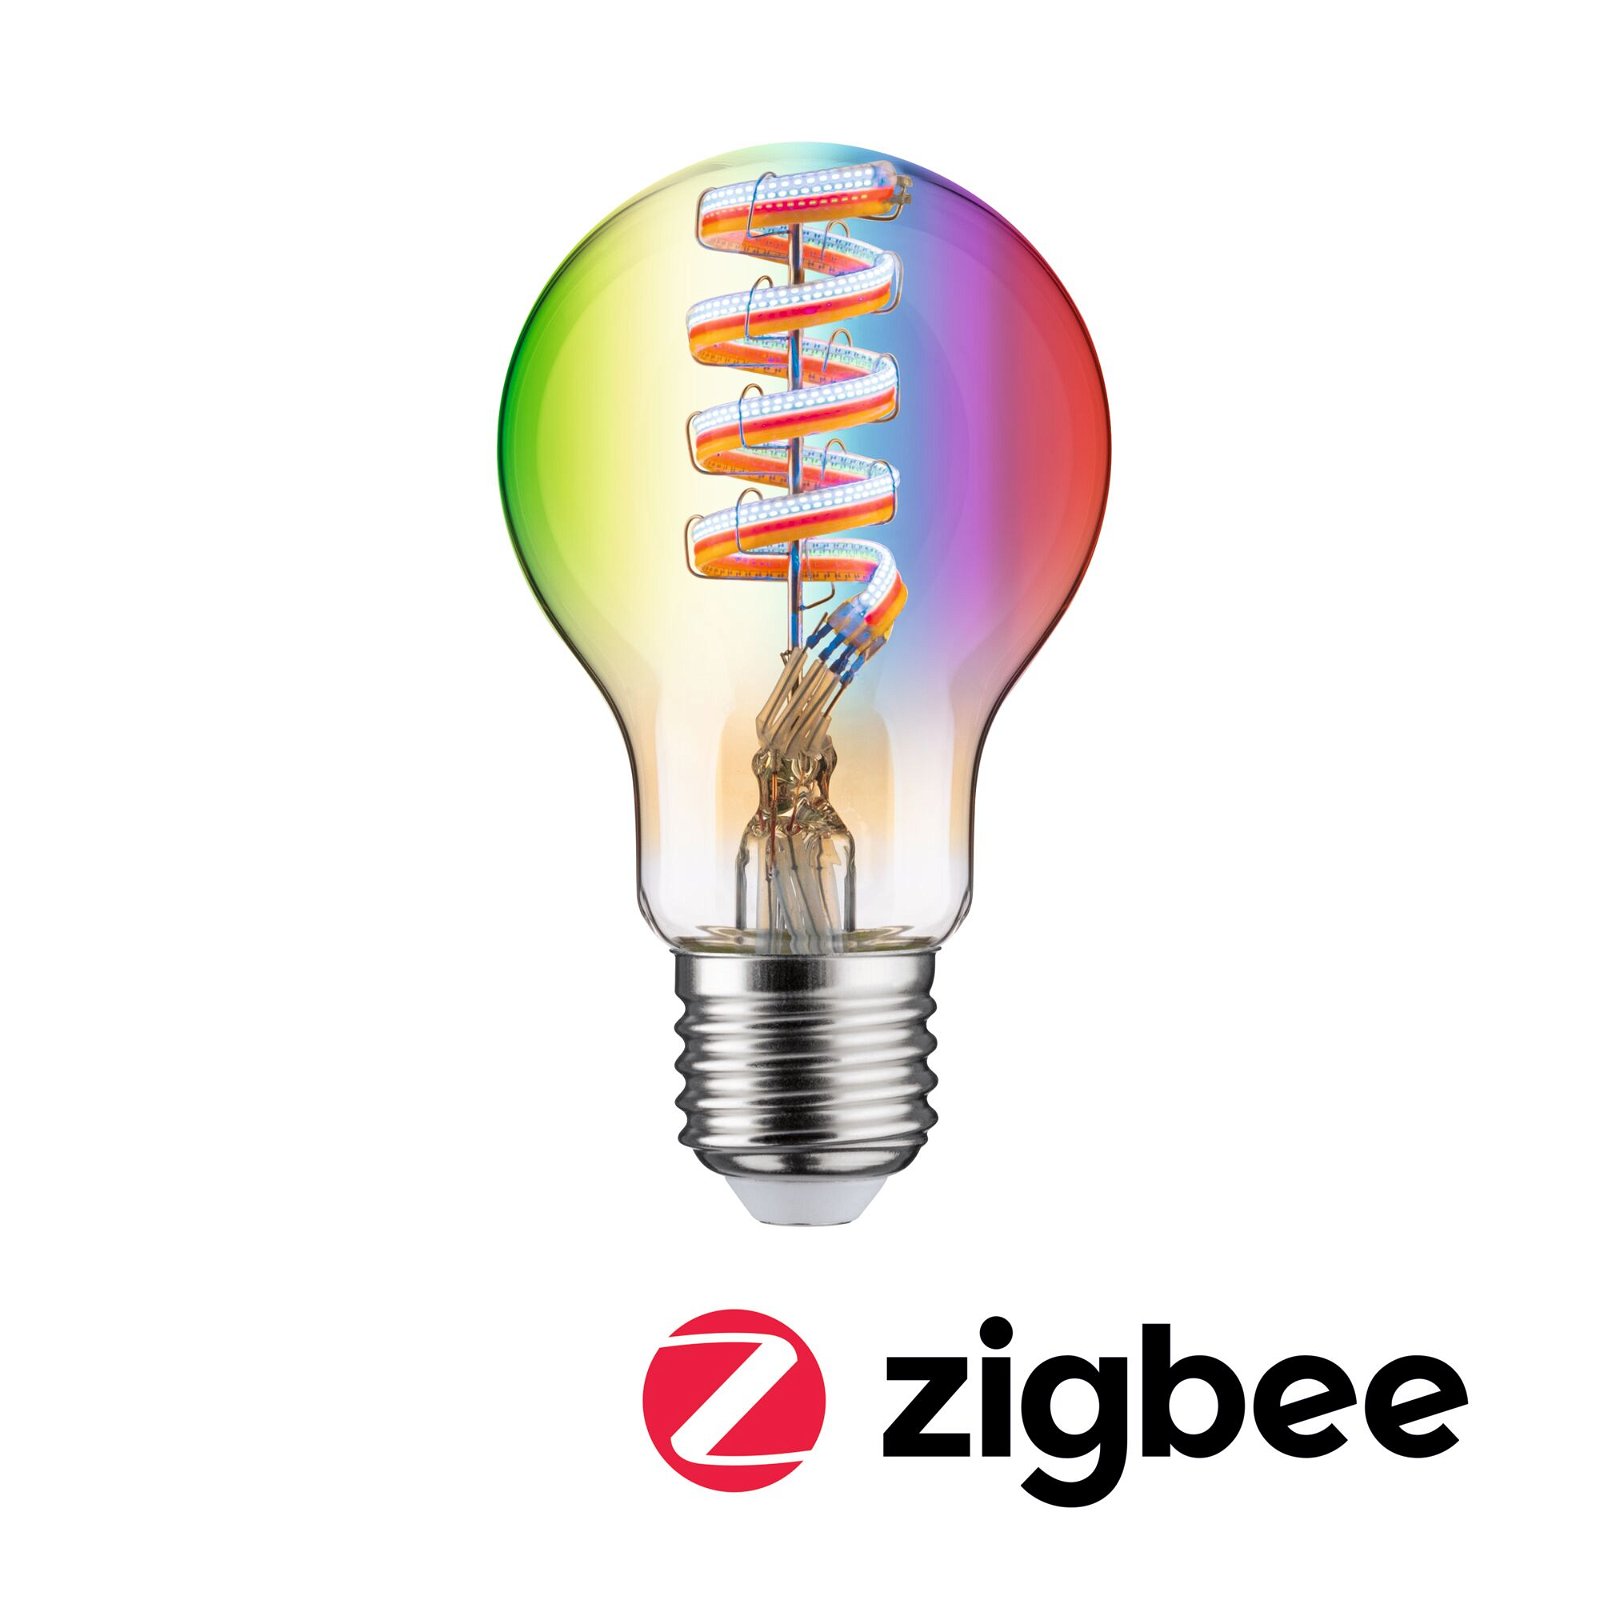 Filament 230 V Smart Home Zigbee 3.0 Ampoule LED E27 470lm 6,3W RGBW+ gradable Doré